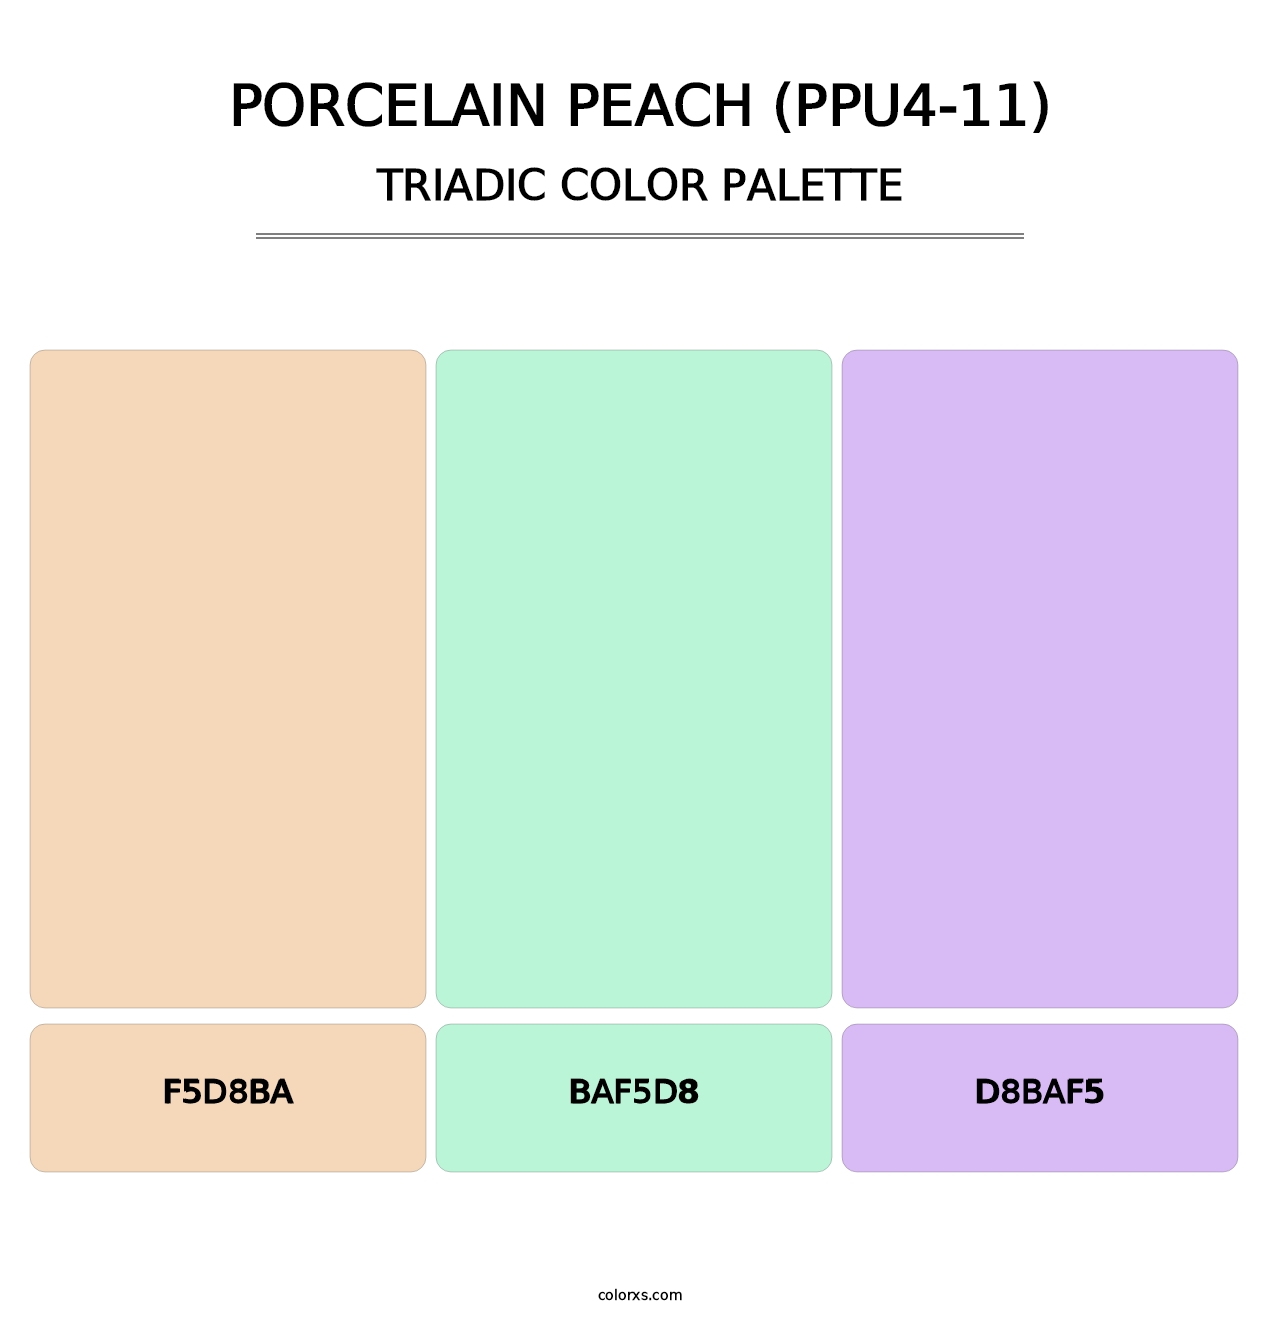 Porcelain Peach (PPU4-11) - Triadic Color Palette